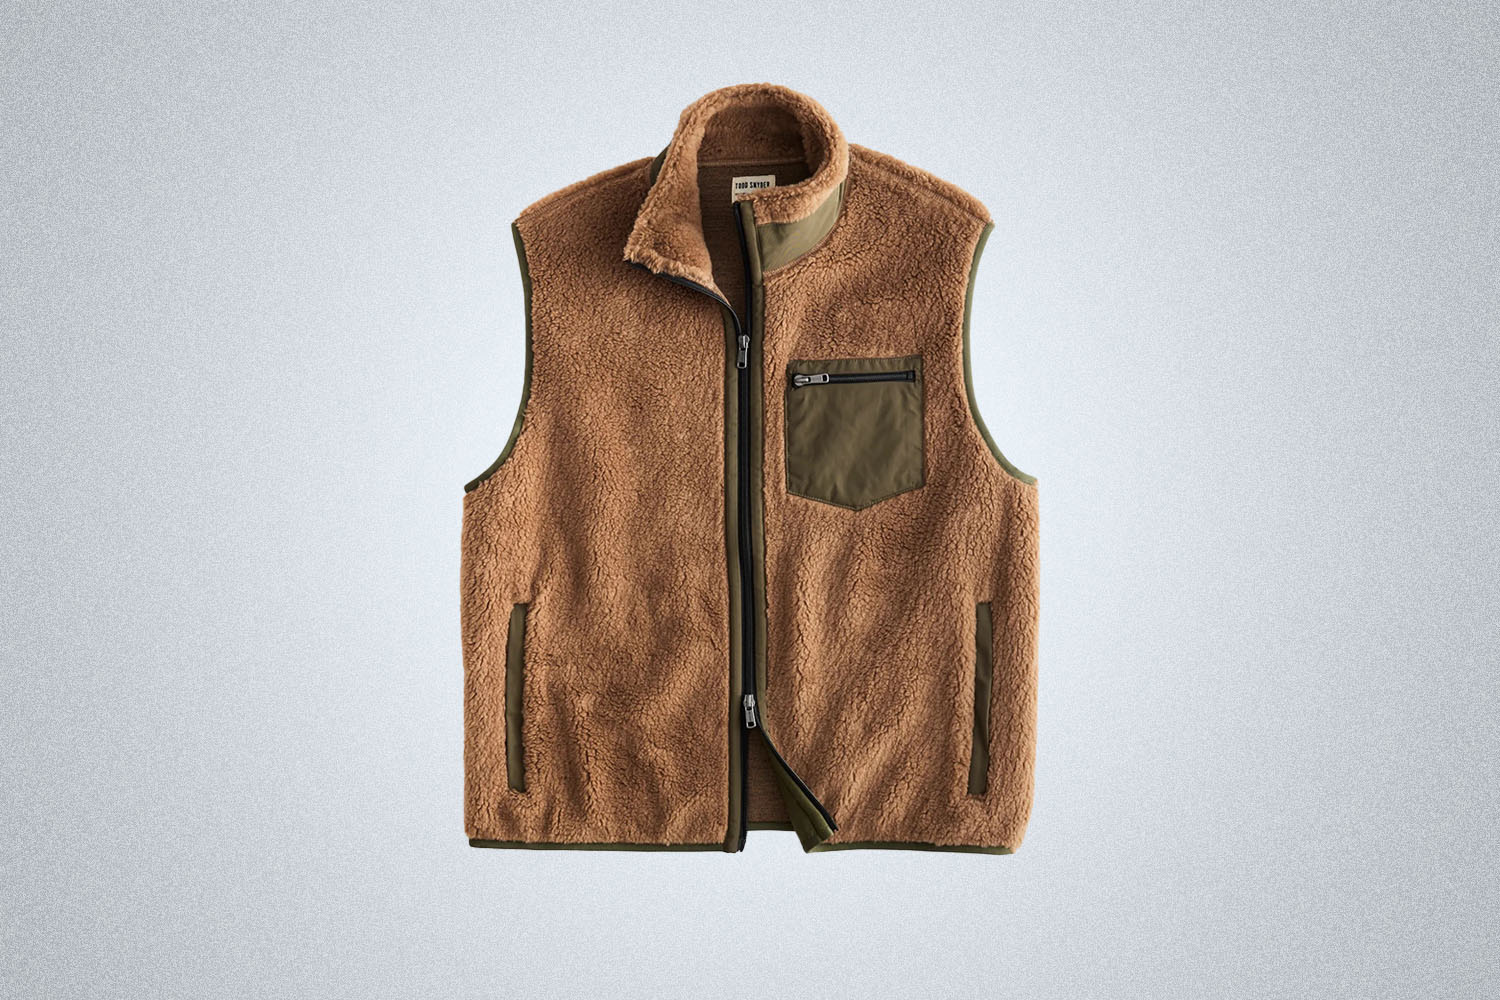 Todd Snyder Solid Adirondack Fleece Vest in Camel